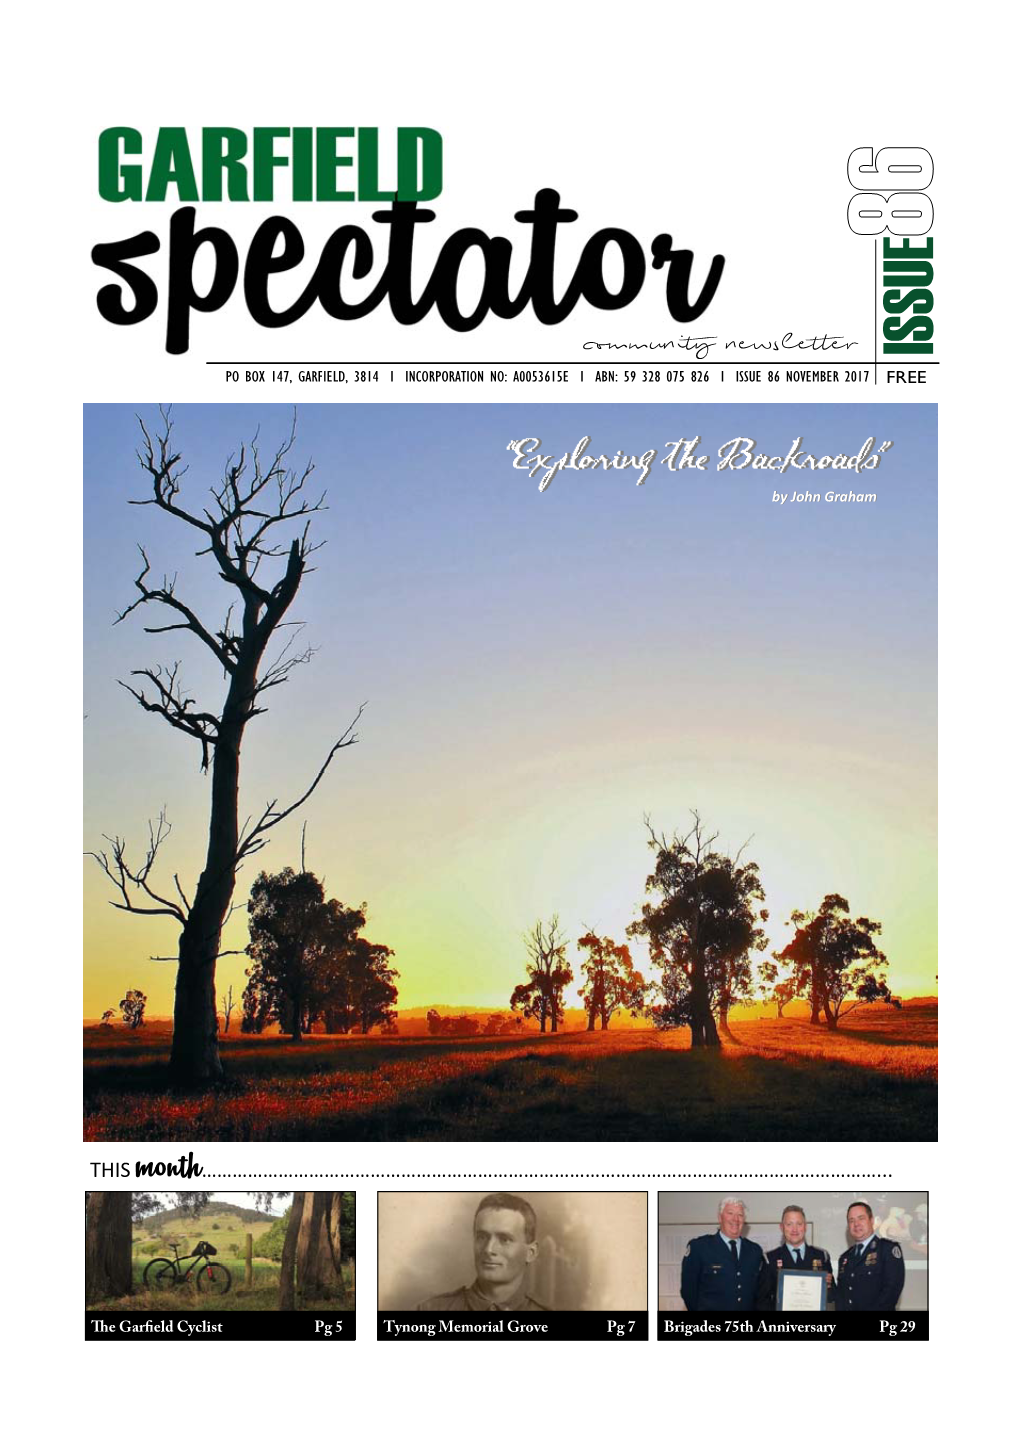 Garfield Spectator Issue 86 November 2017